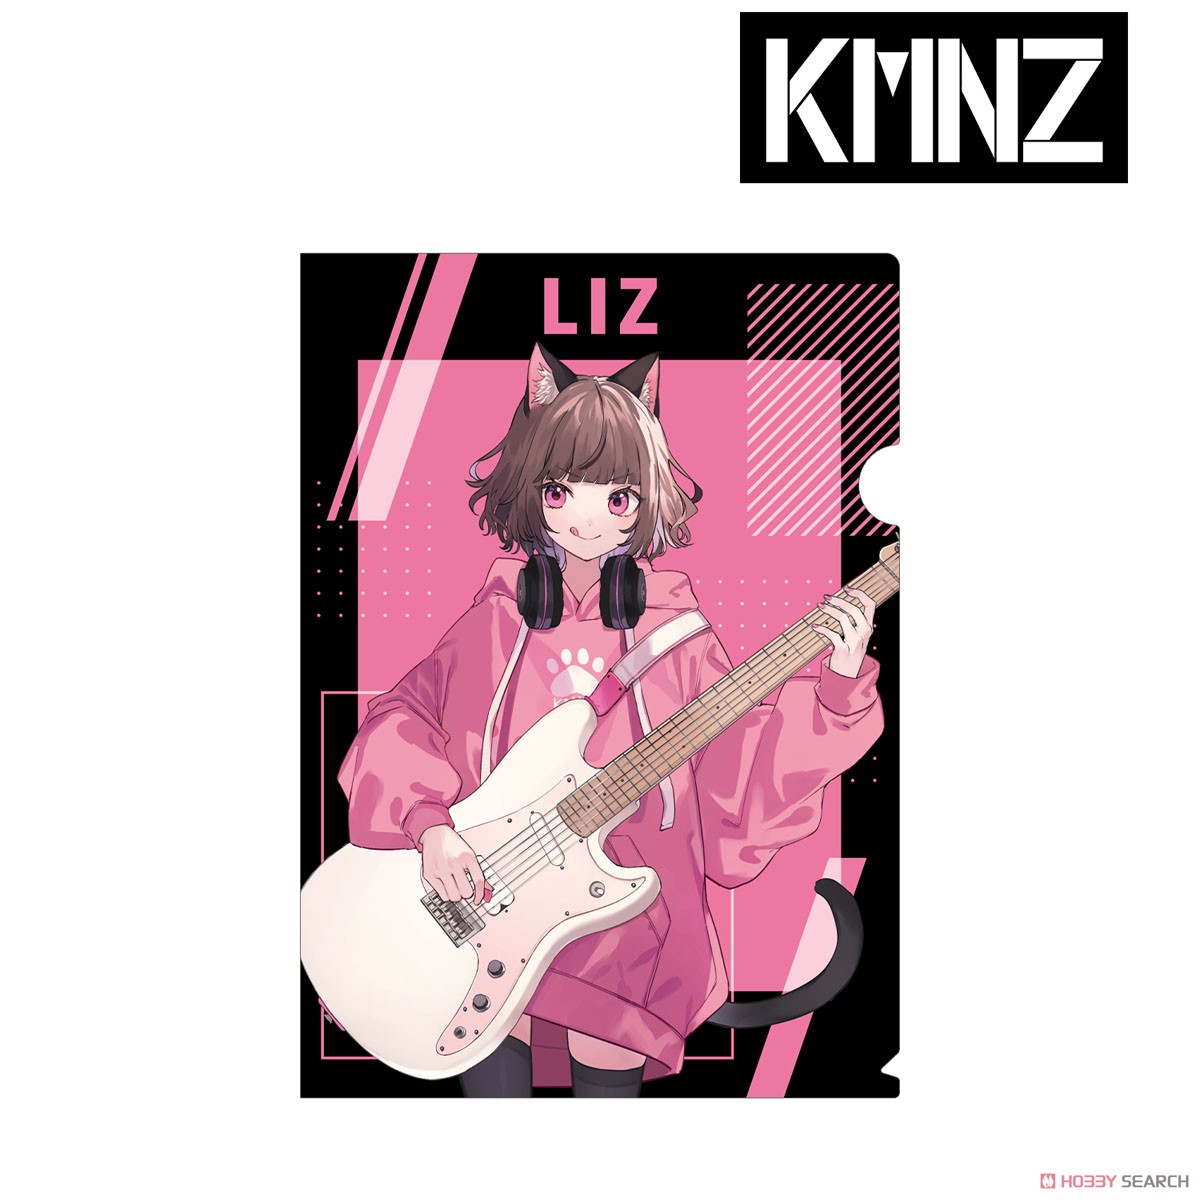 KMNZ 描き下ろしイラスト LIZ ギター演奏ver. クリアファイル (キャラクターグッズ) 商品画像1